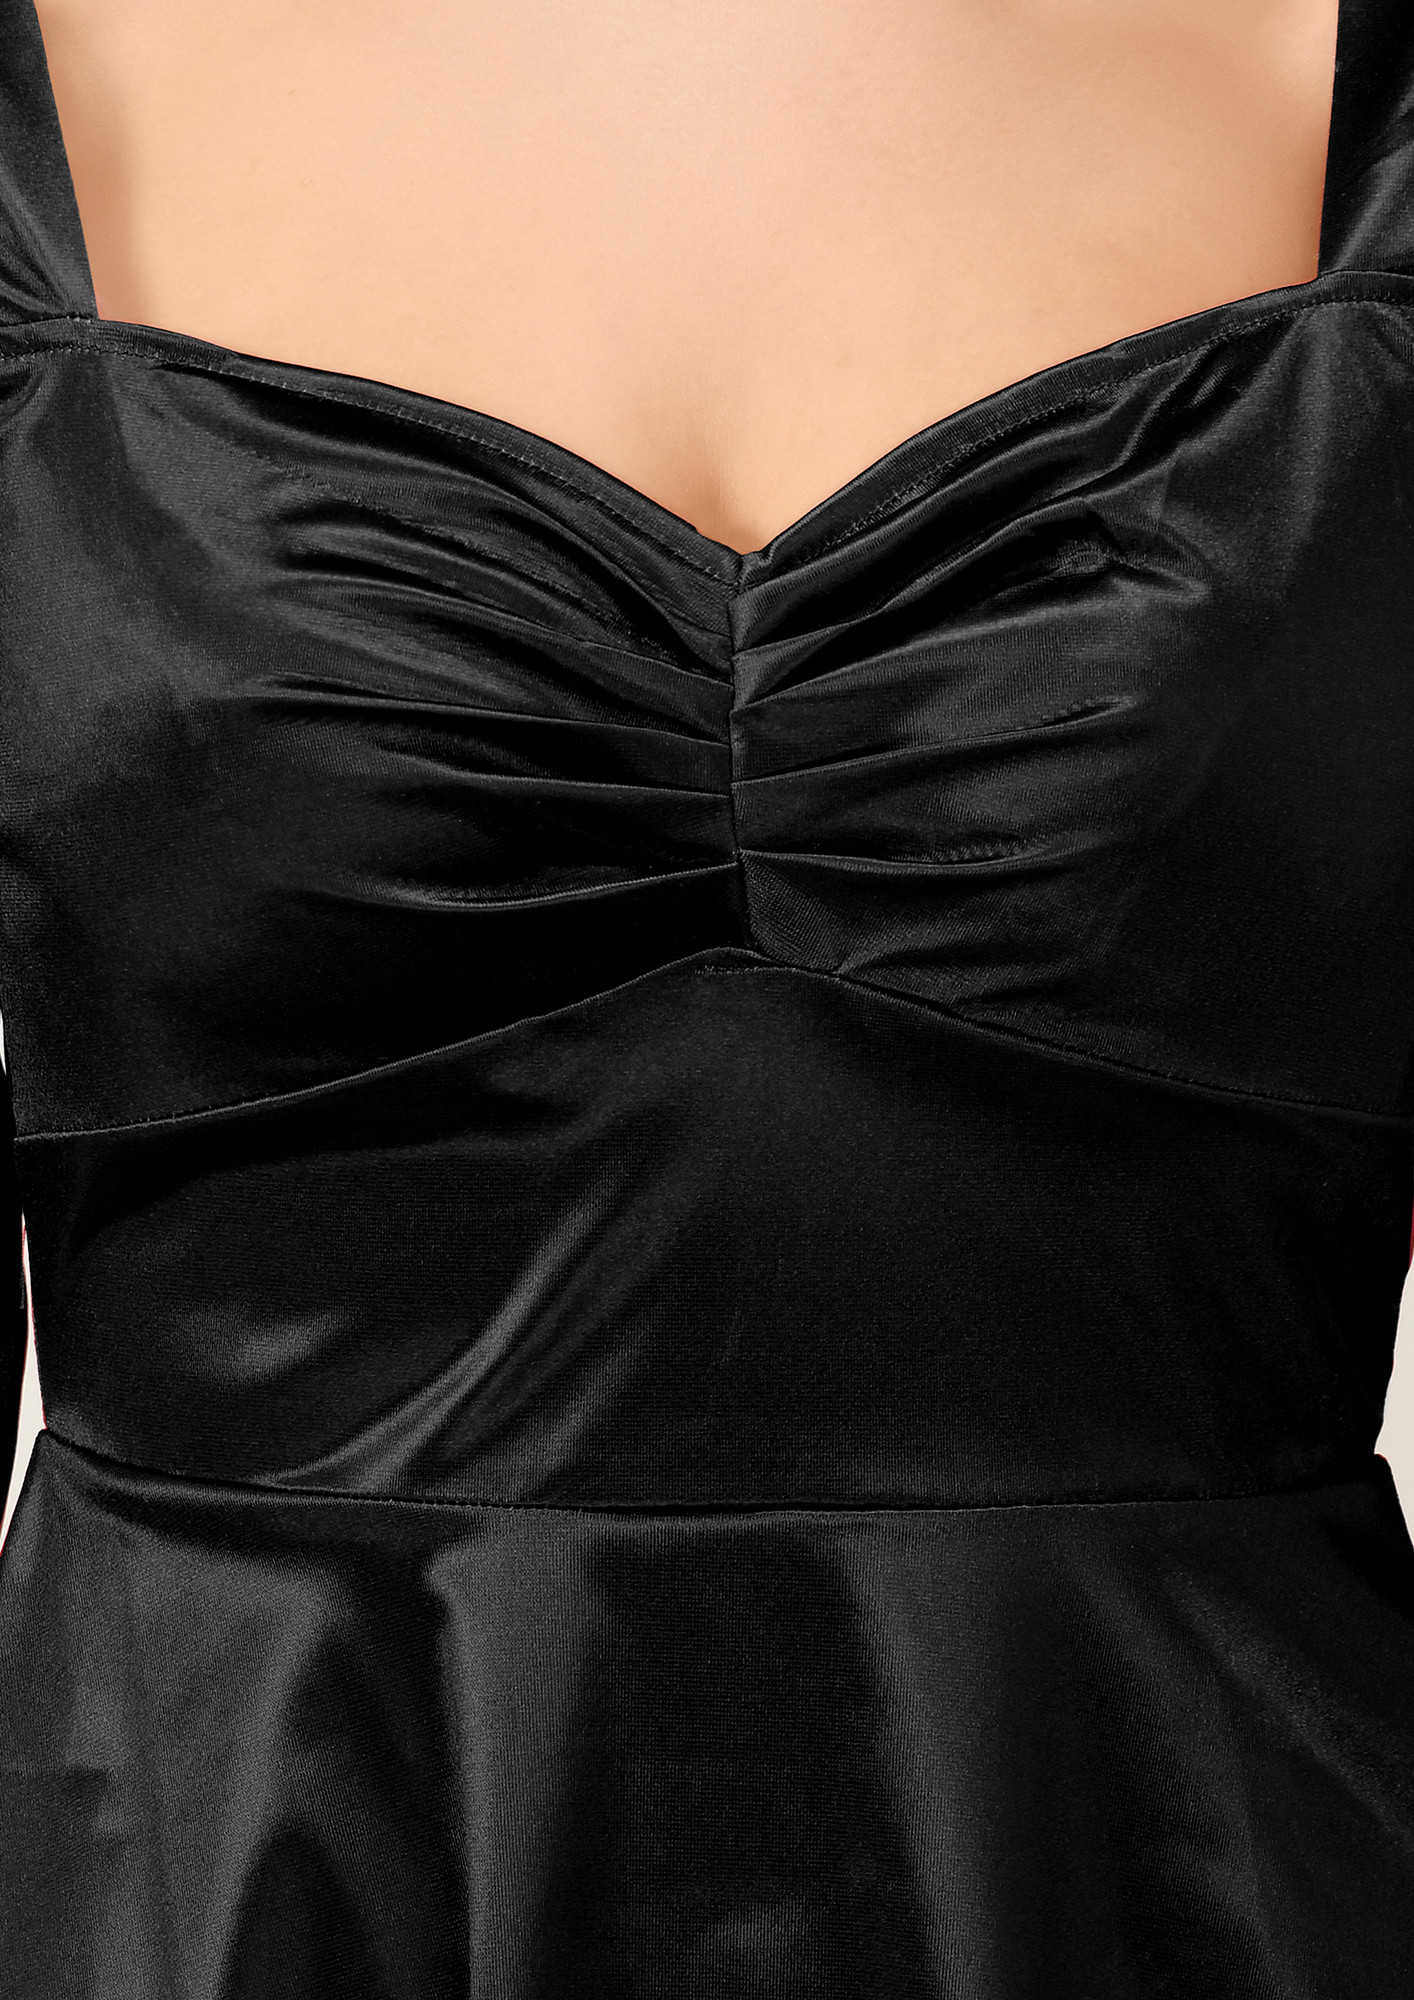 Buy Eternity Black Satin Dress for Women Online in India